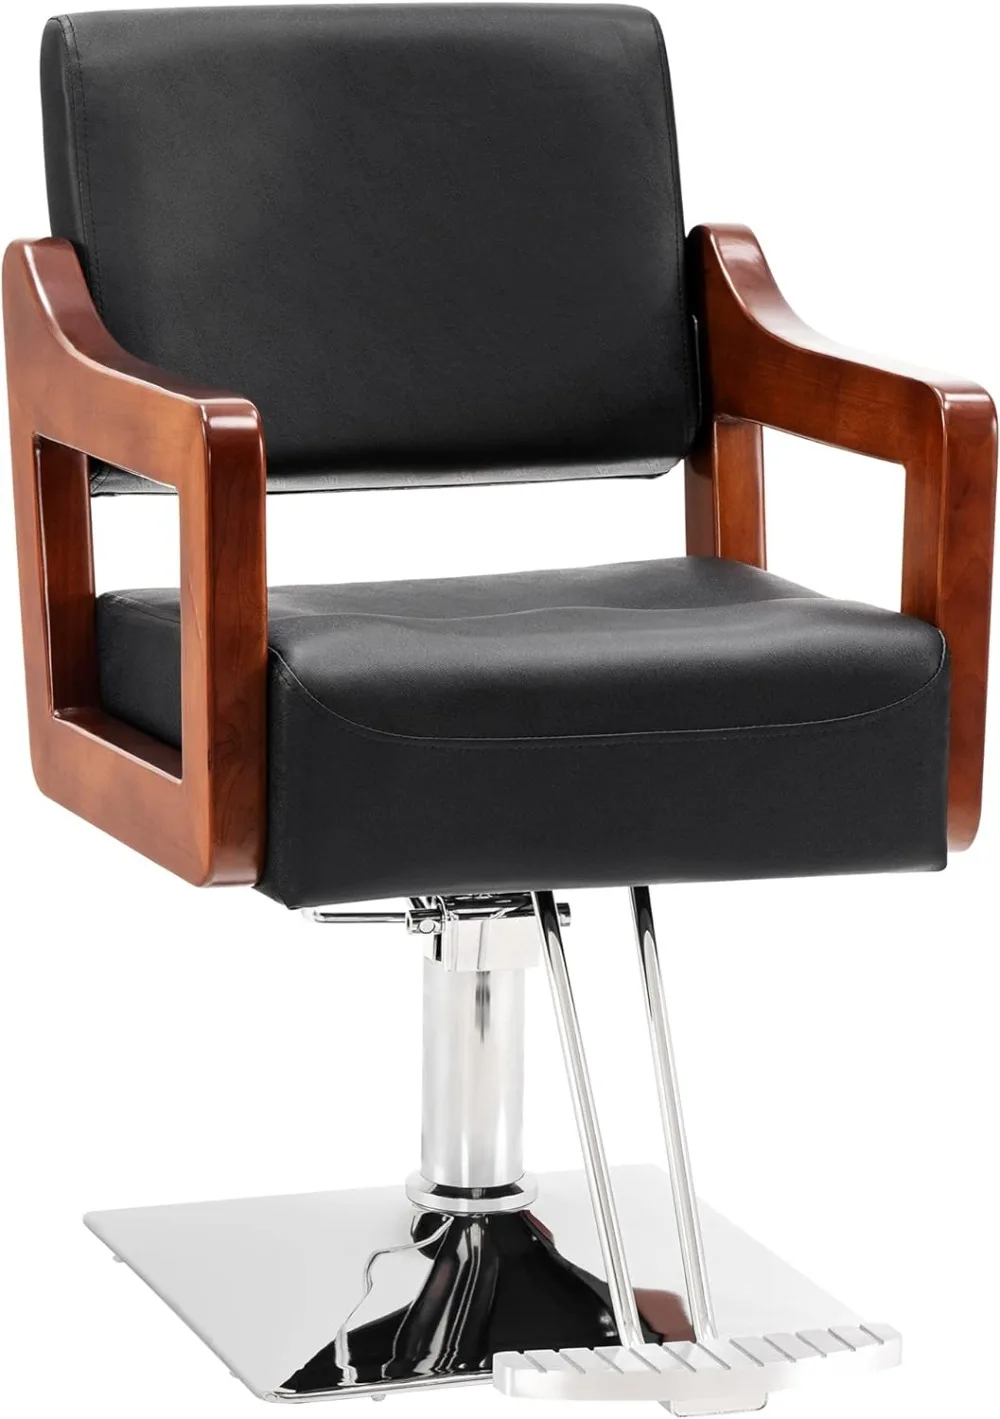 

BarberPub Salon Chair for Hair Stylist, Classic Hydraulic Barber Styling Chair, Beauty Spa Equipment 8812 (Black)